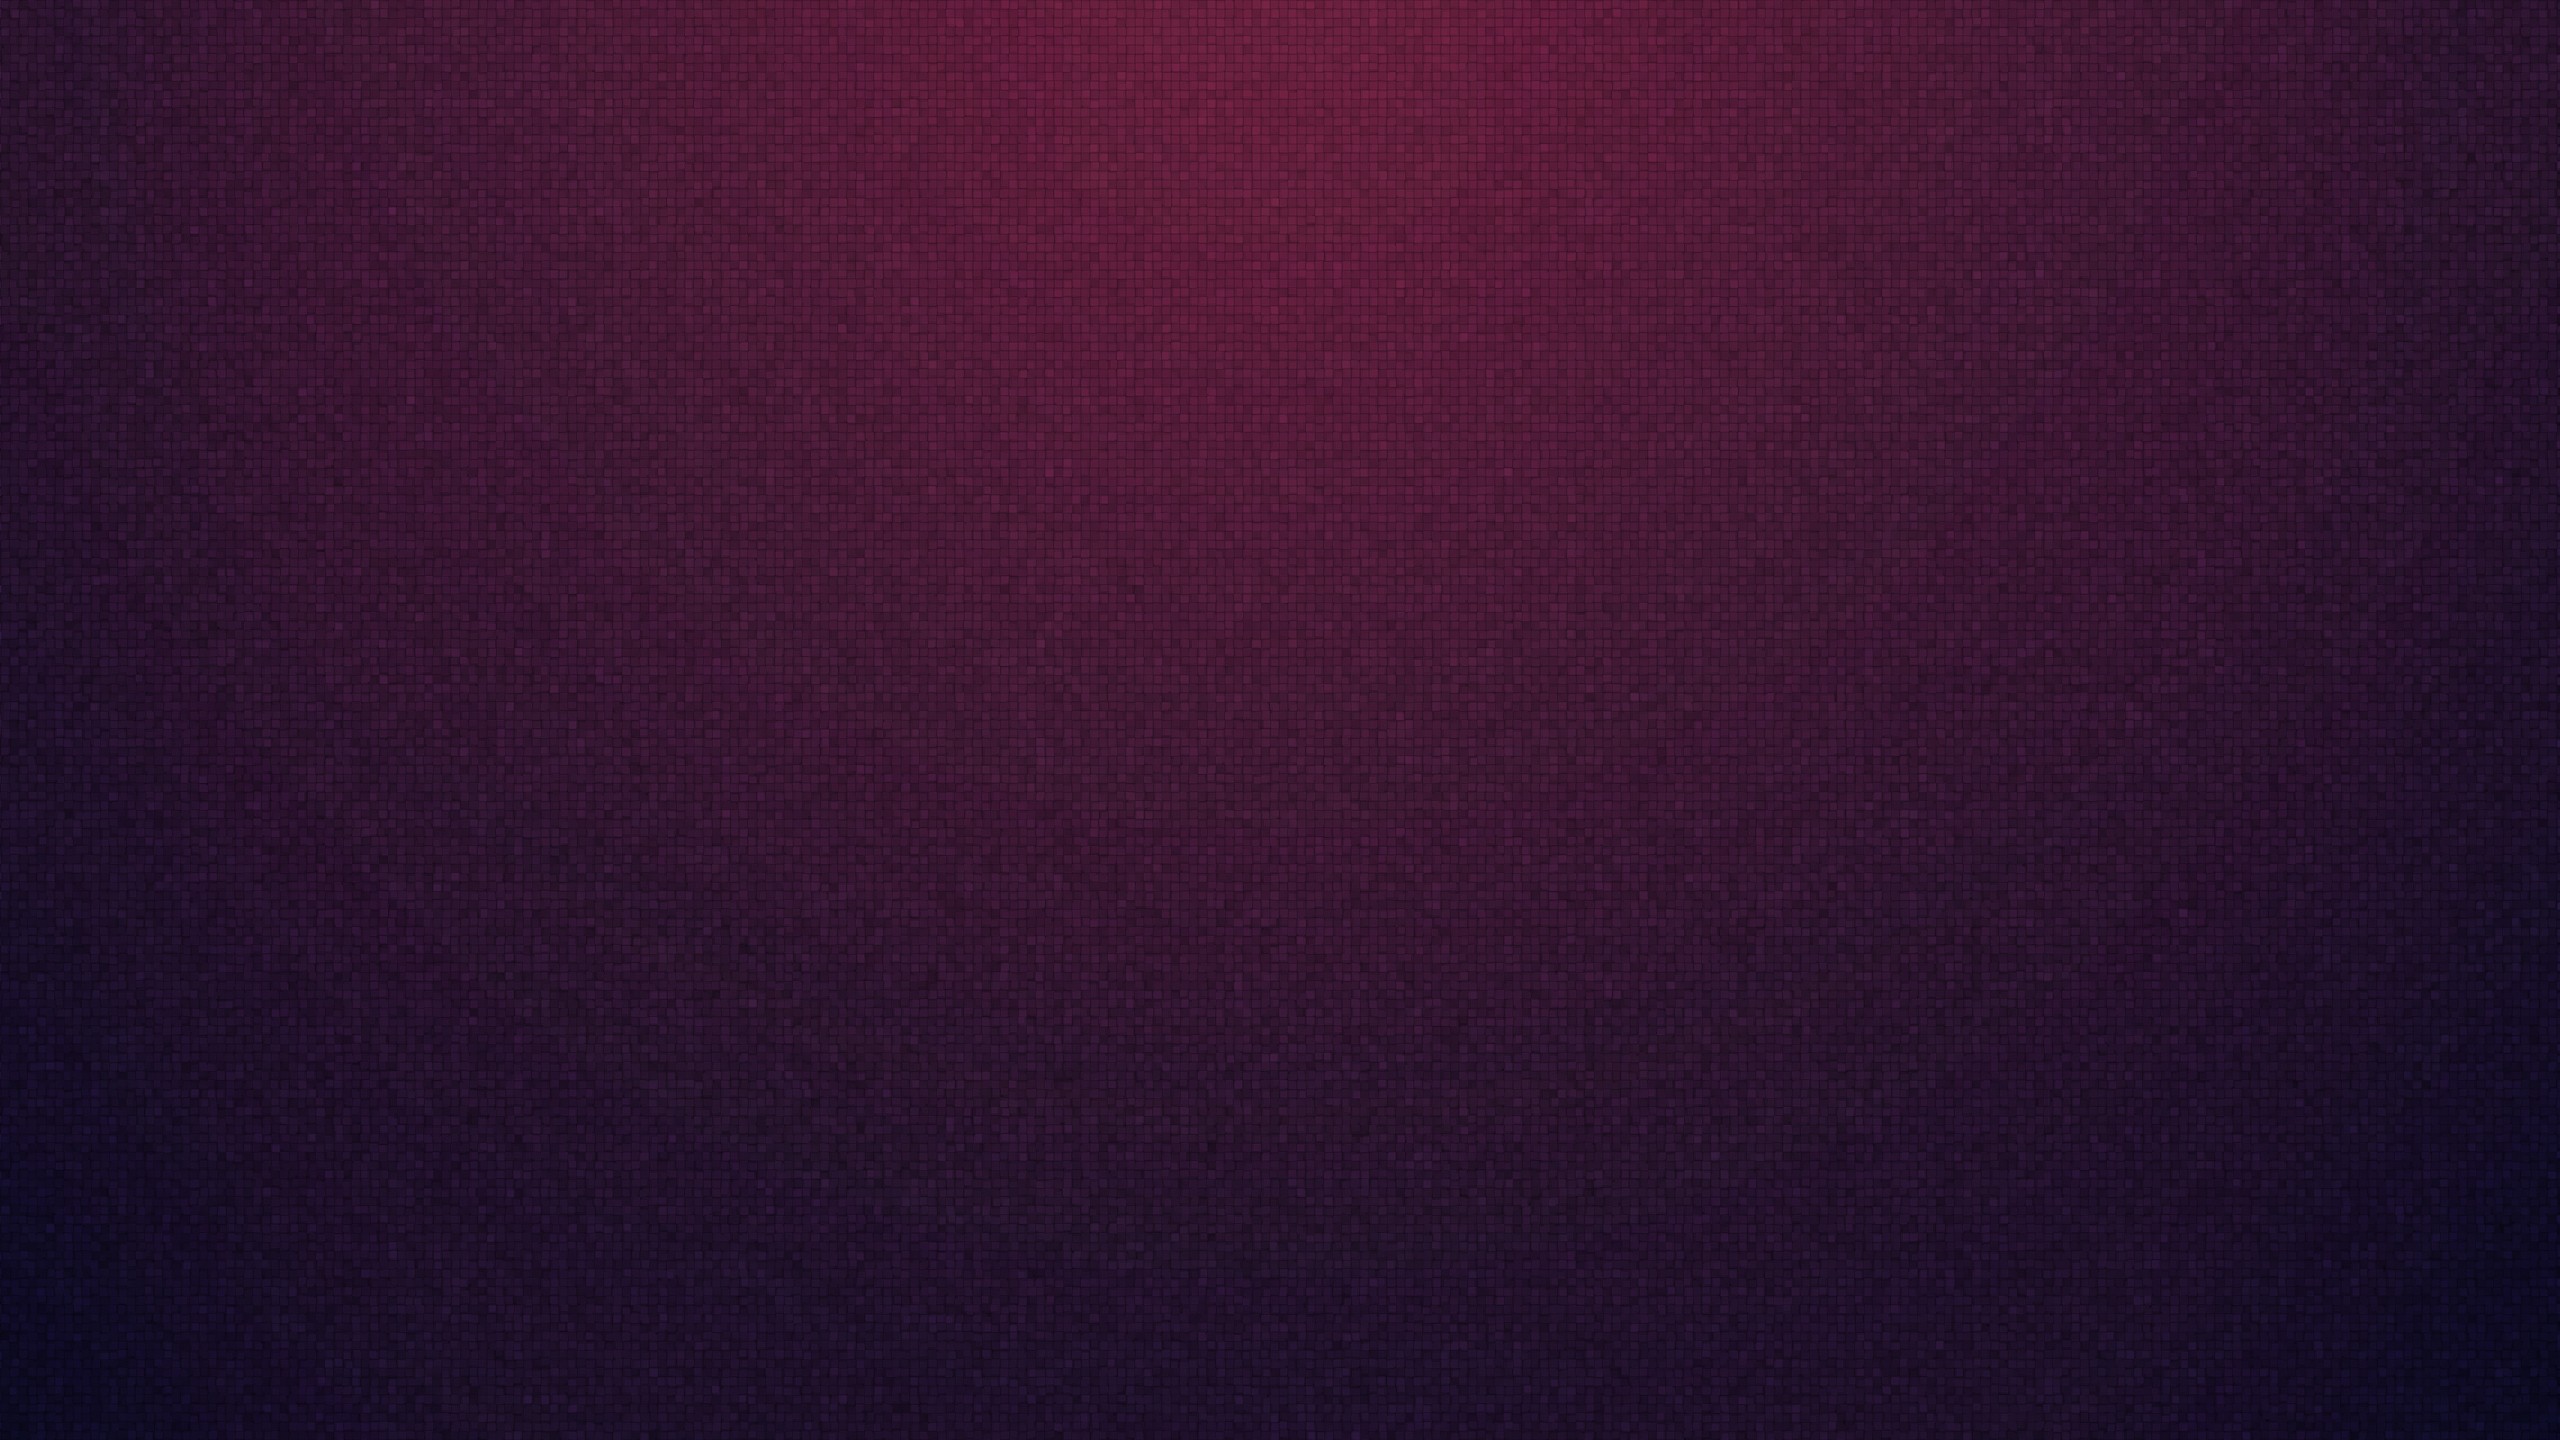 General 2560x1440 simple background violet gradient texture